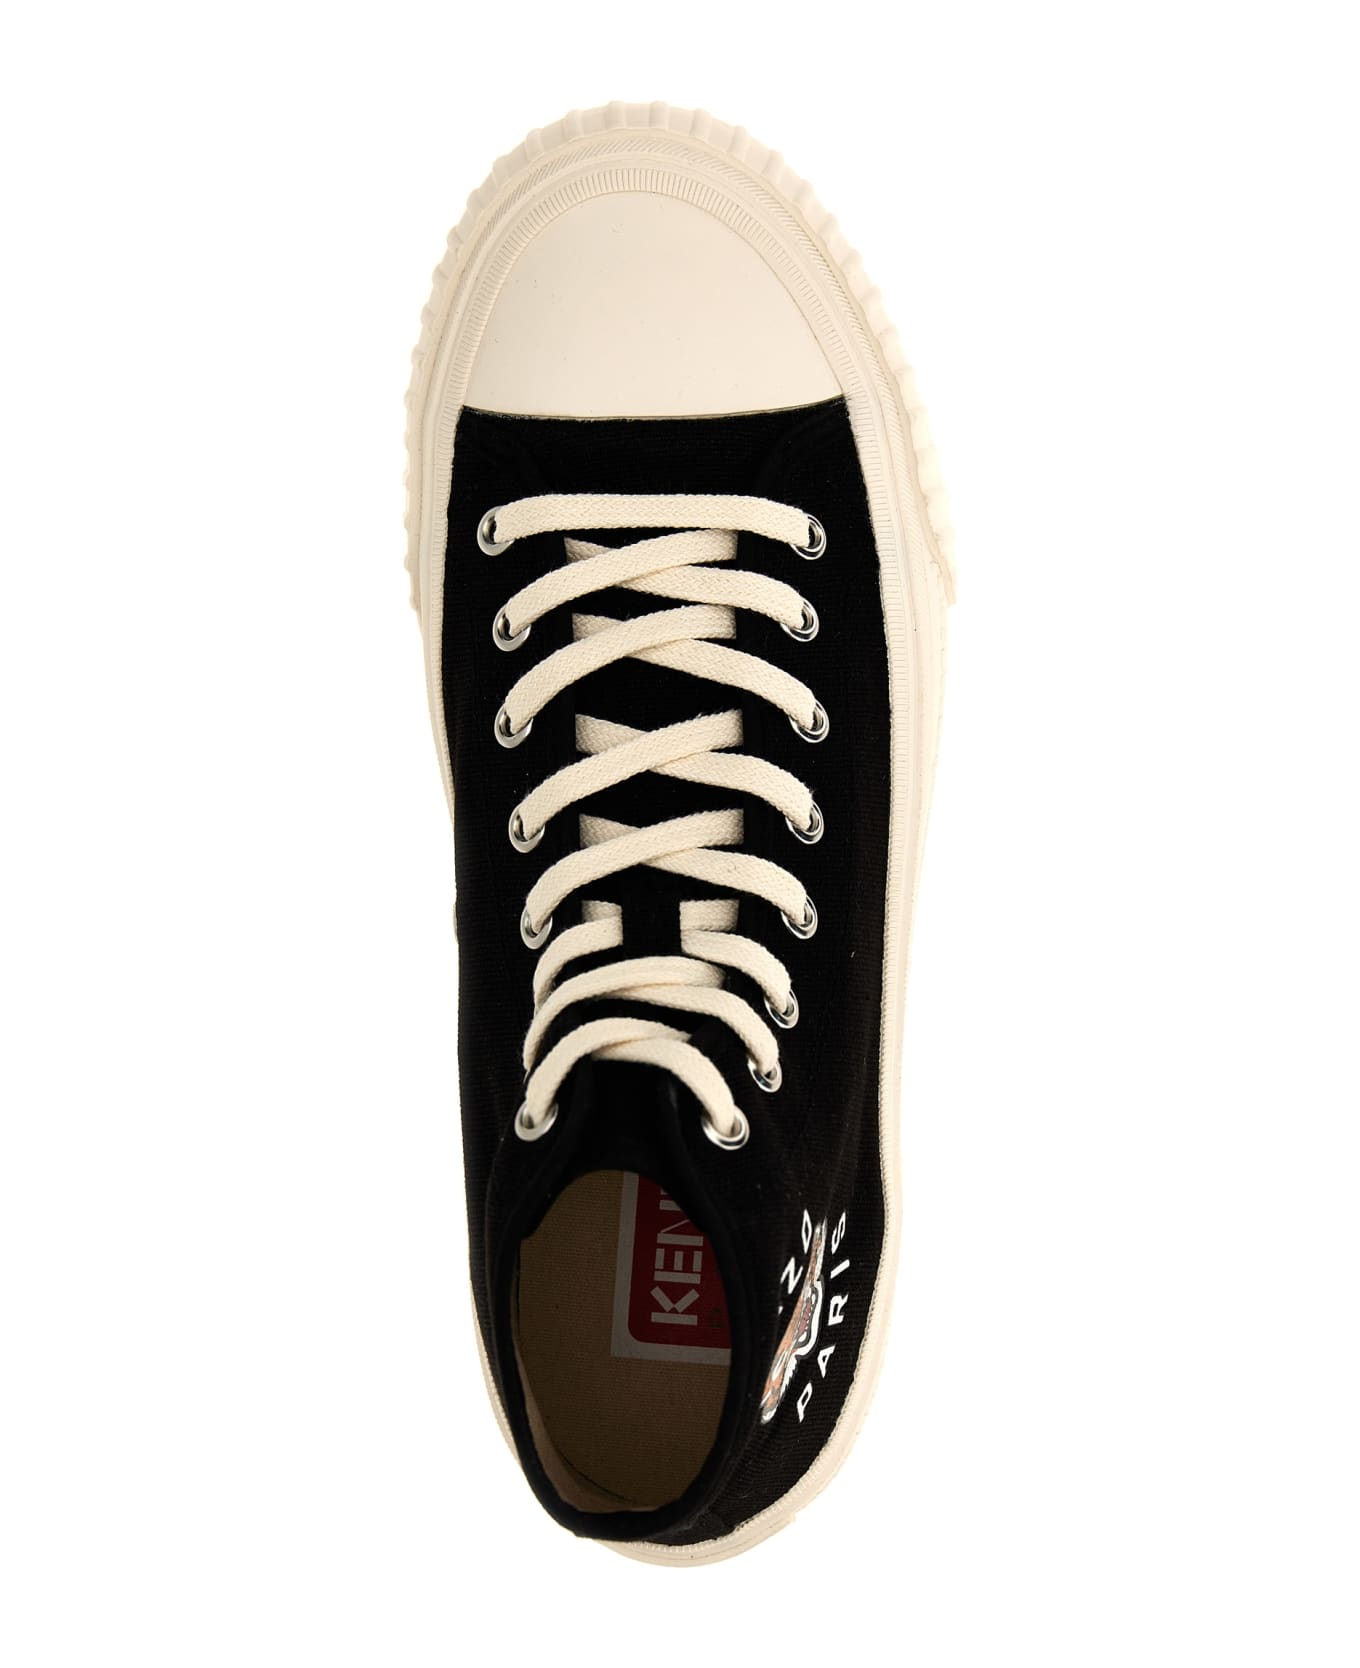 Kenzo 'foxy' Sneakers - White/Black